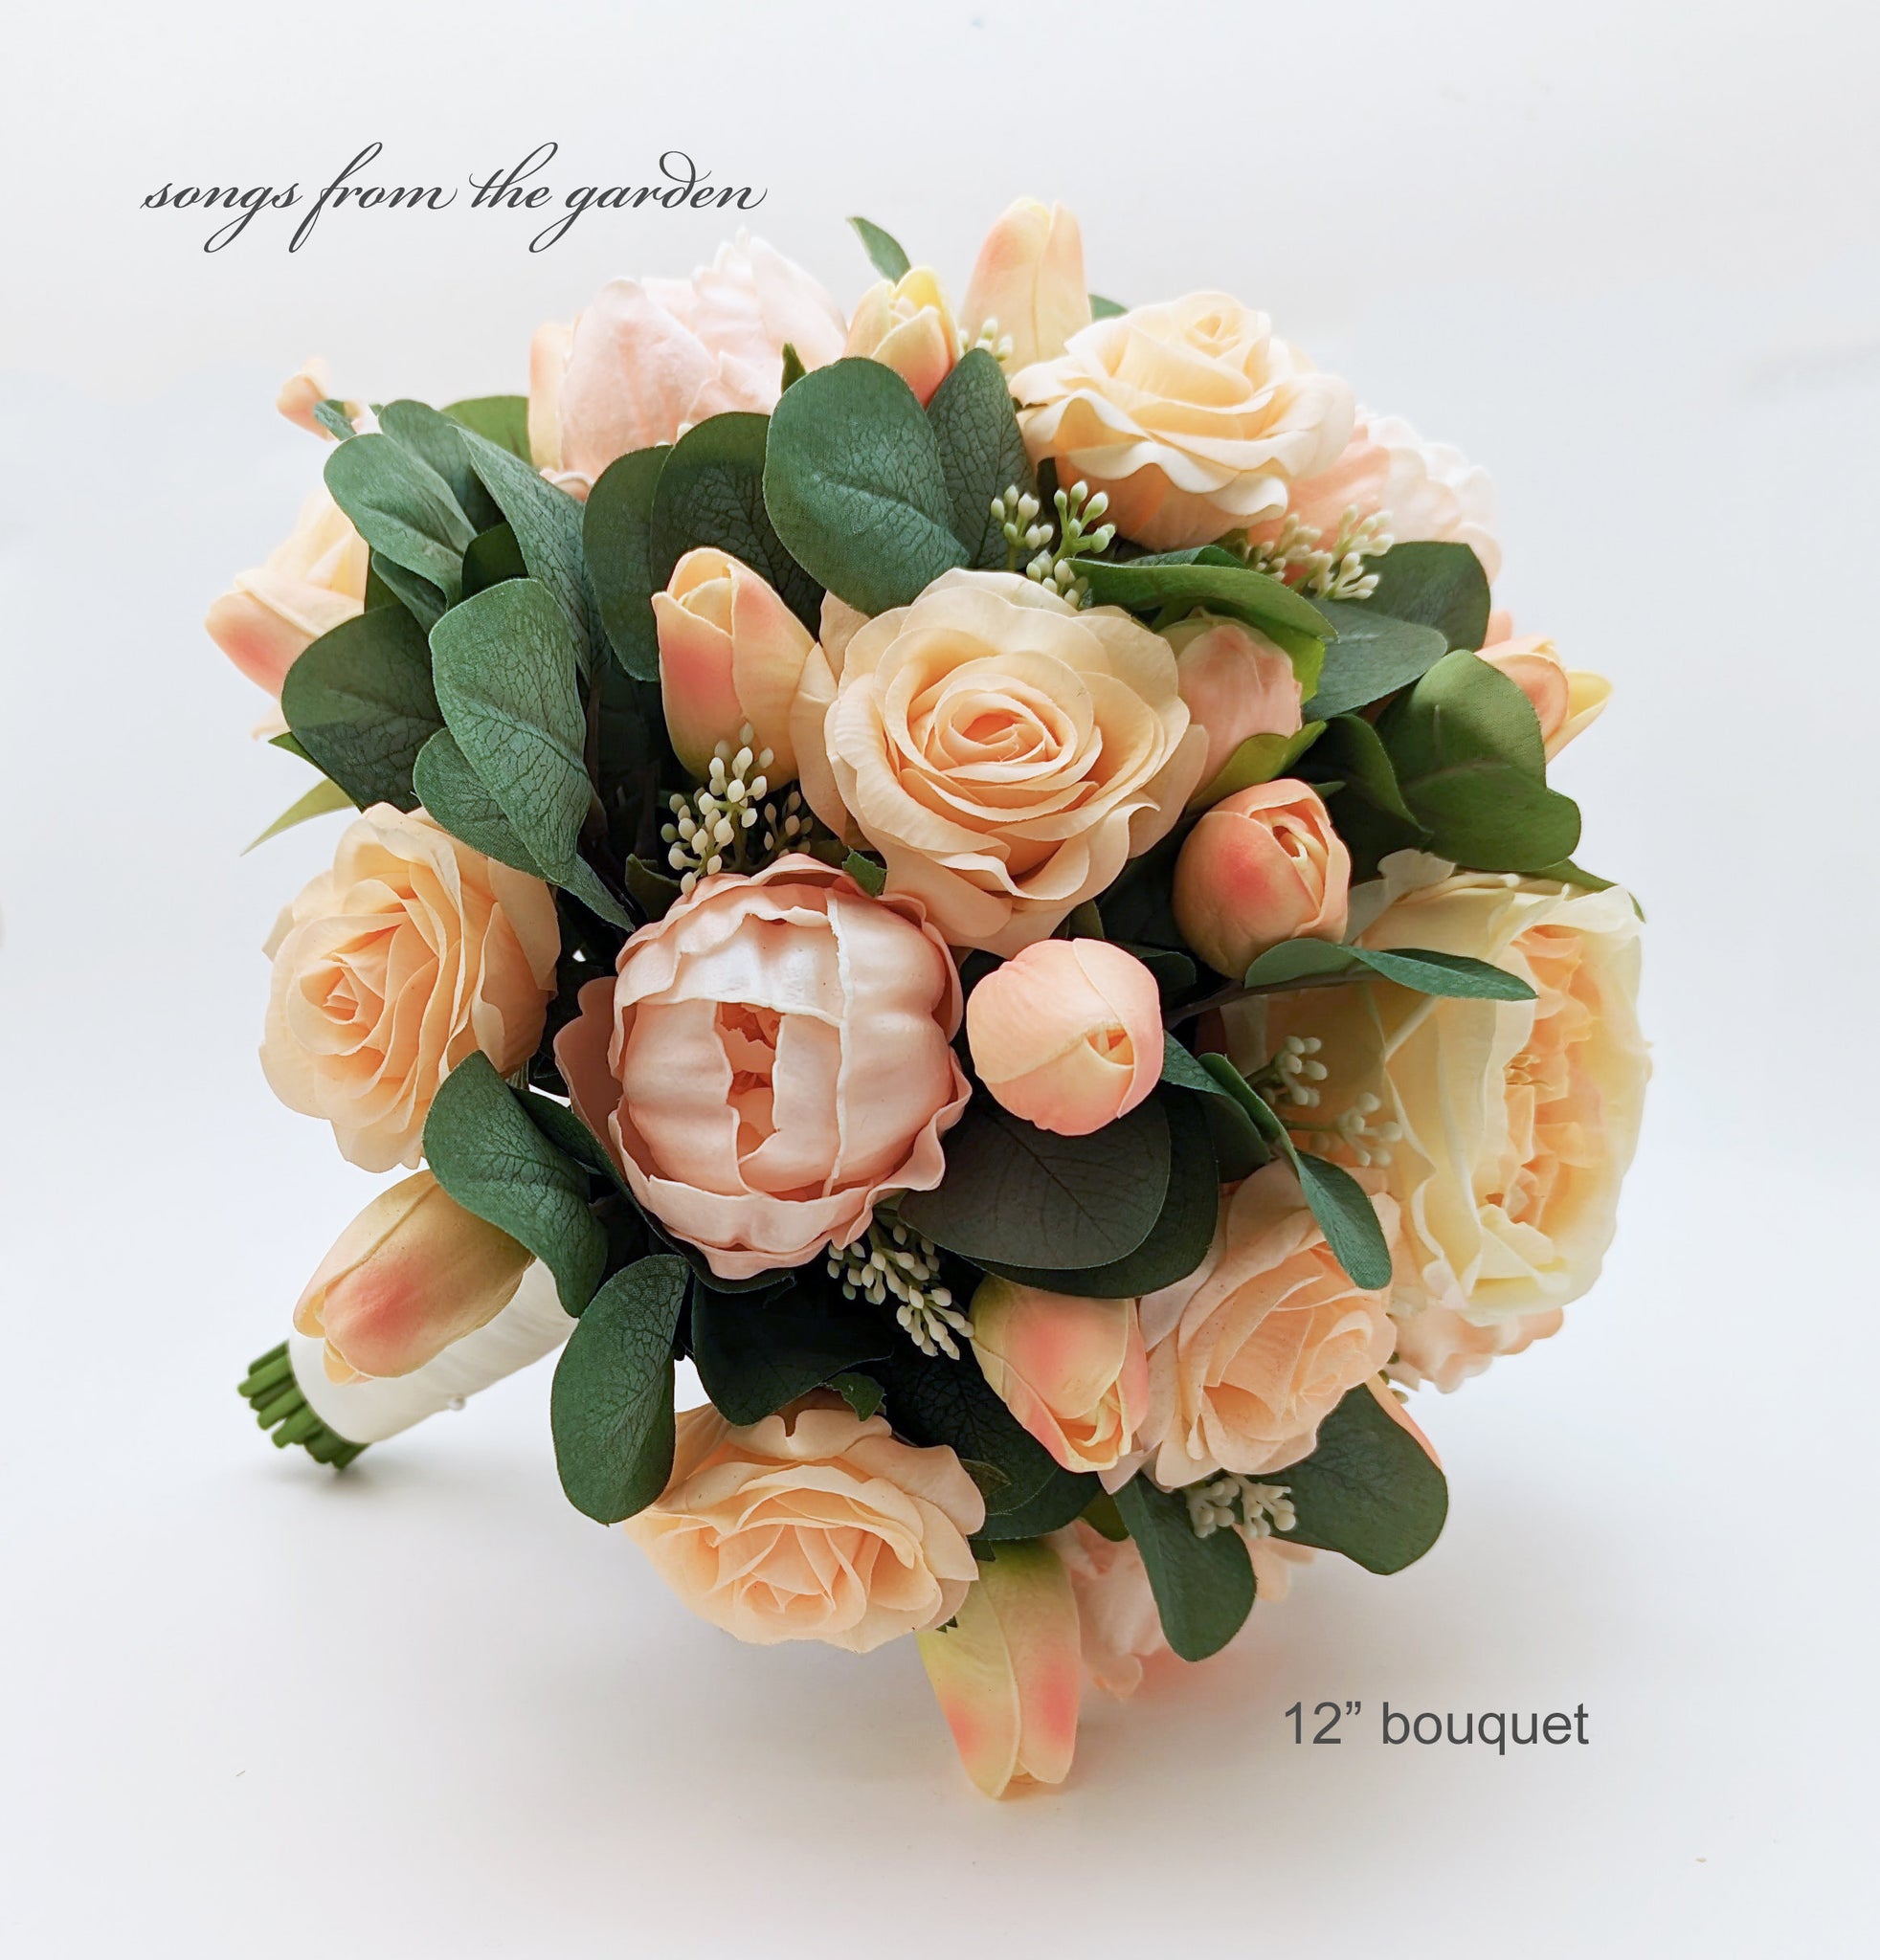 peach rose wedding bouquet